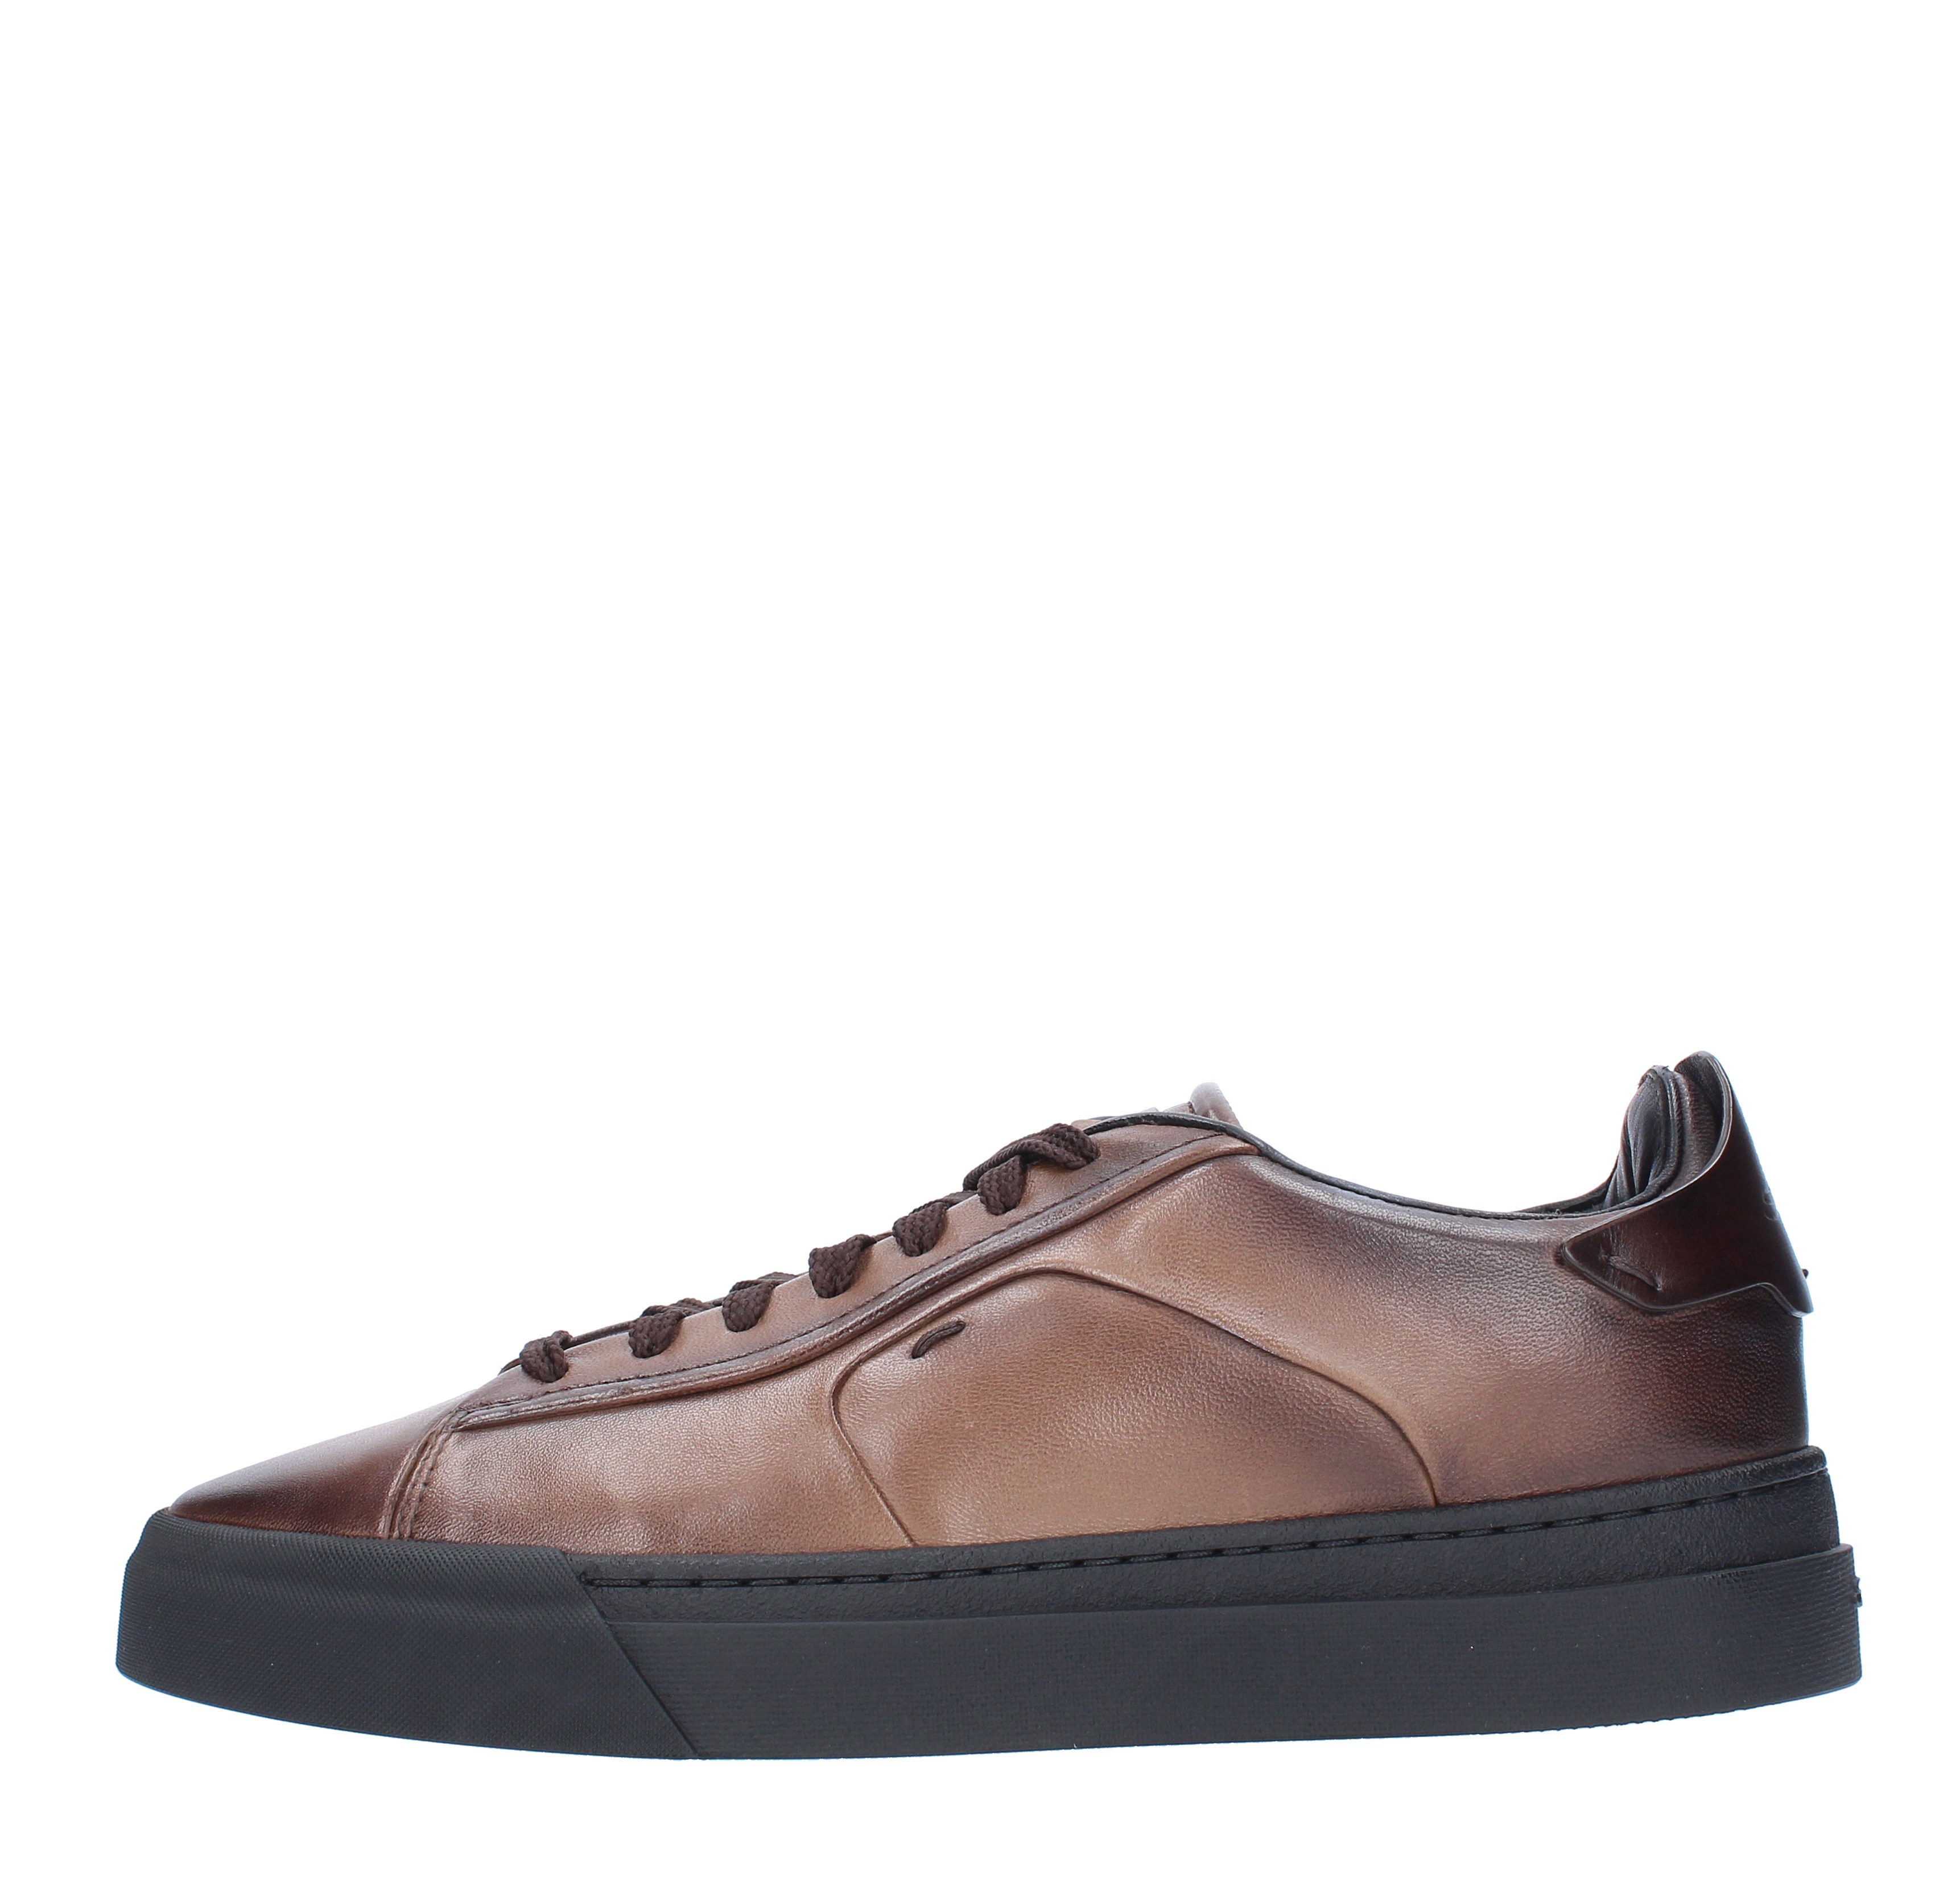 Sneakers modello MBGT21554 in pelle - SANTONI - Ginevra calzature